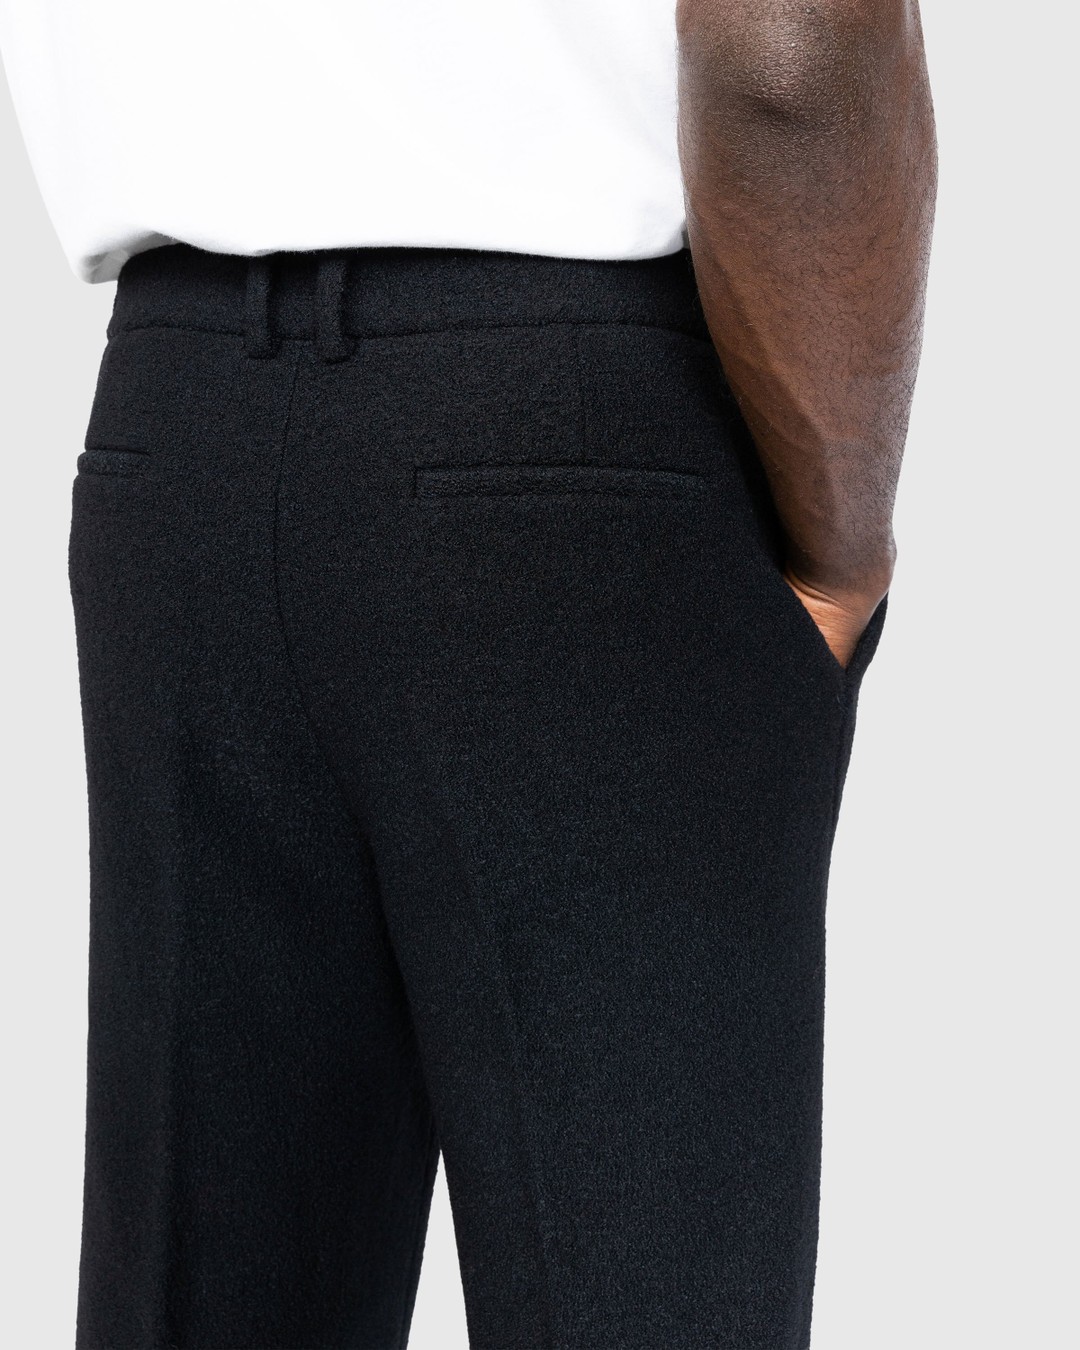 Trussardi – Boucle Jersey Trousers Black - Pants - Black - Image 5